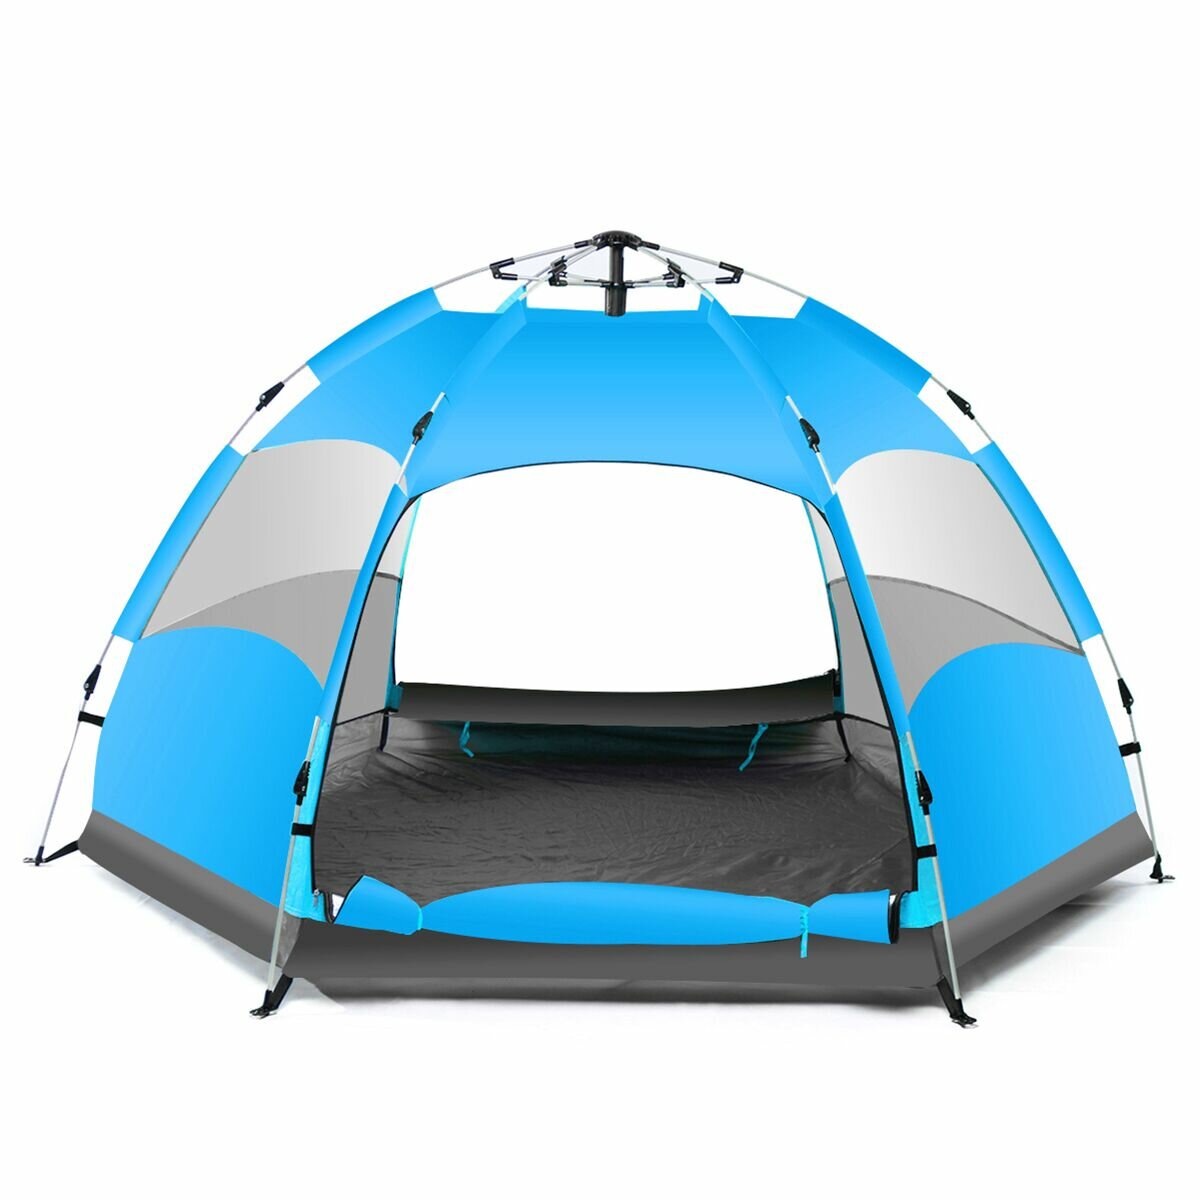 IPRee® 5-7人用自動防水大型キャンプハイキングテントアウトドアベースキャンプブルー/オレンジ